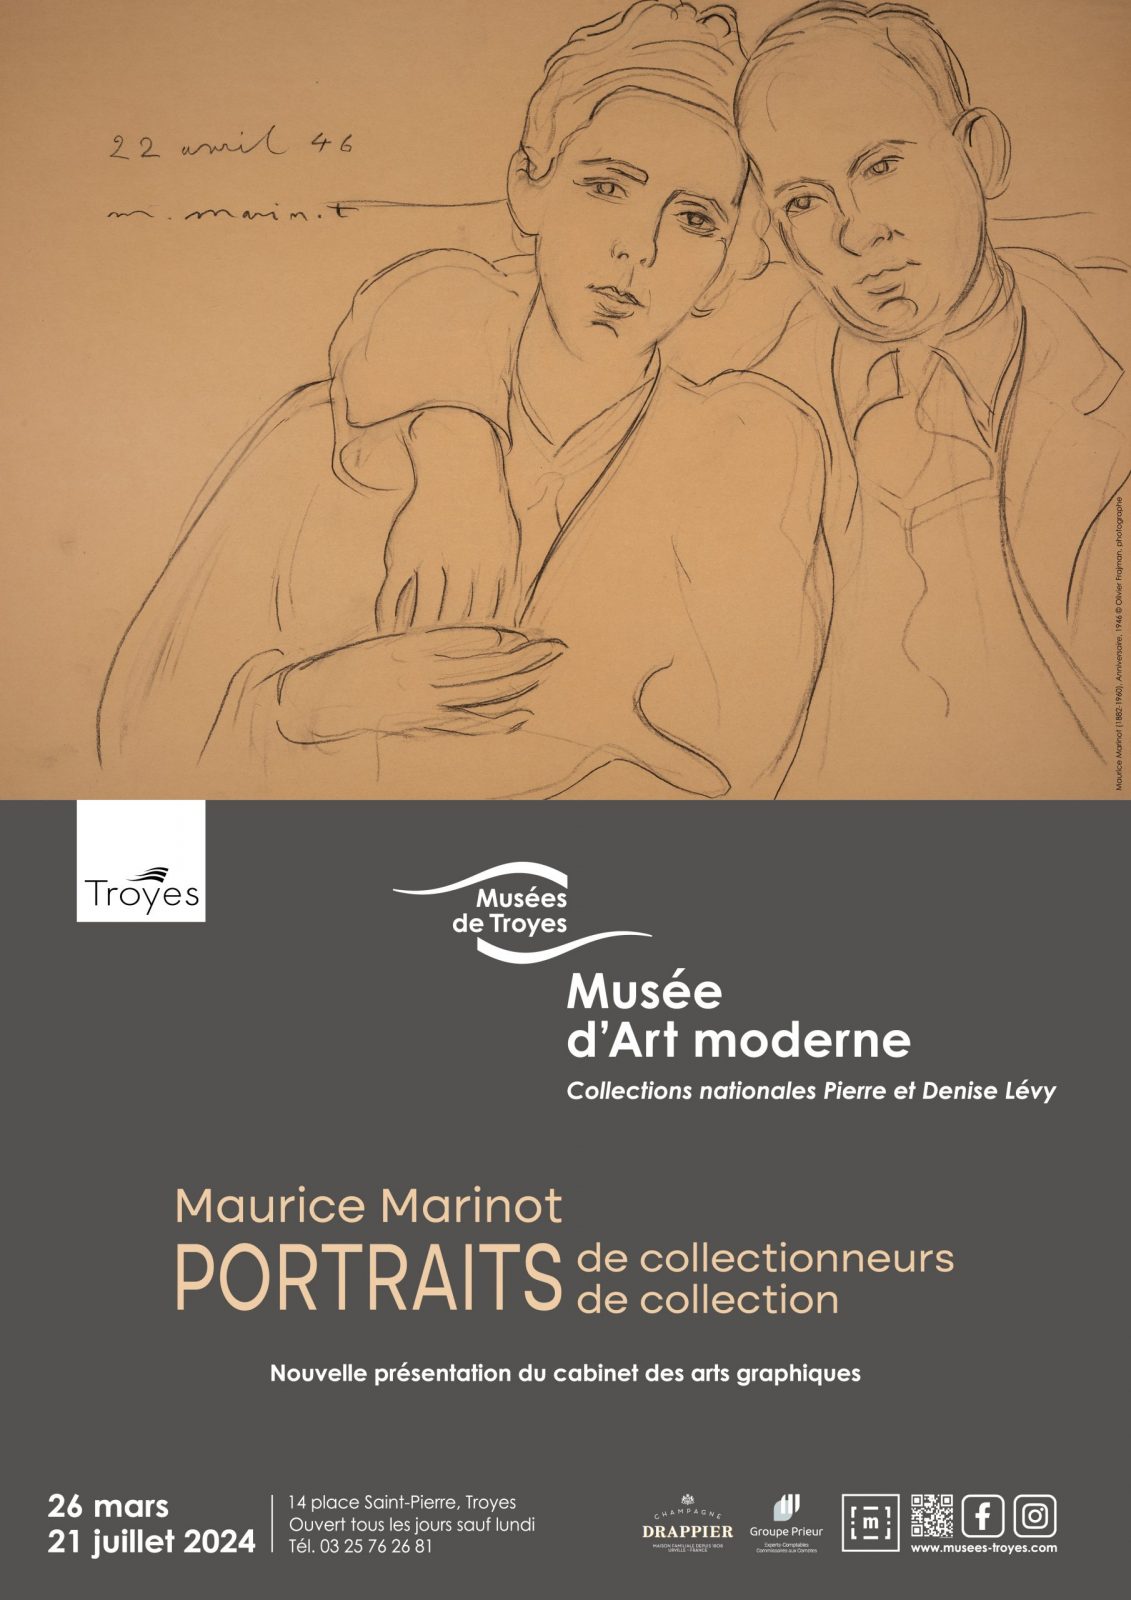 MAURICE MARINOT, PORTRAITS DE COLLECTIONNEURS, PORTRAITS DE COLLECTION